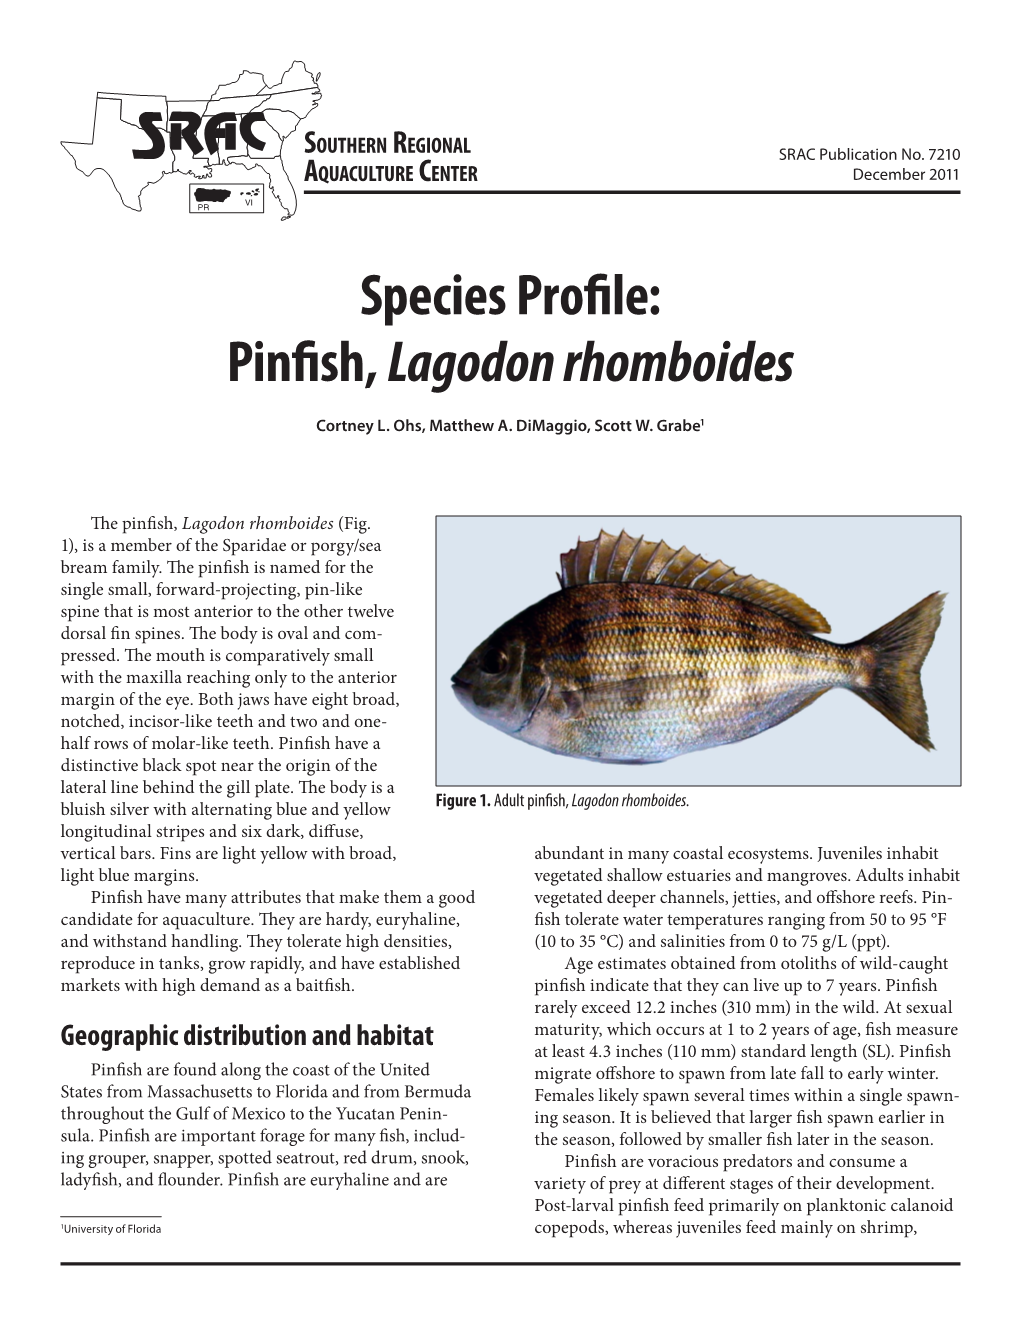 Pinfish, Lagodon Rhomboides